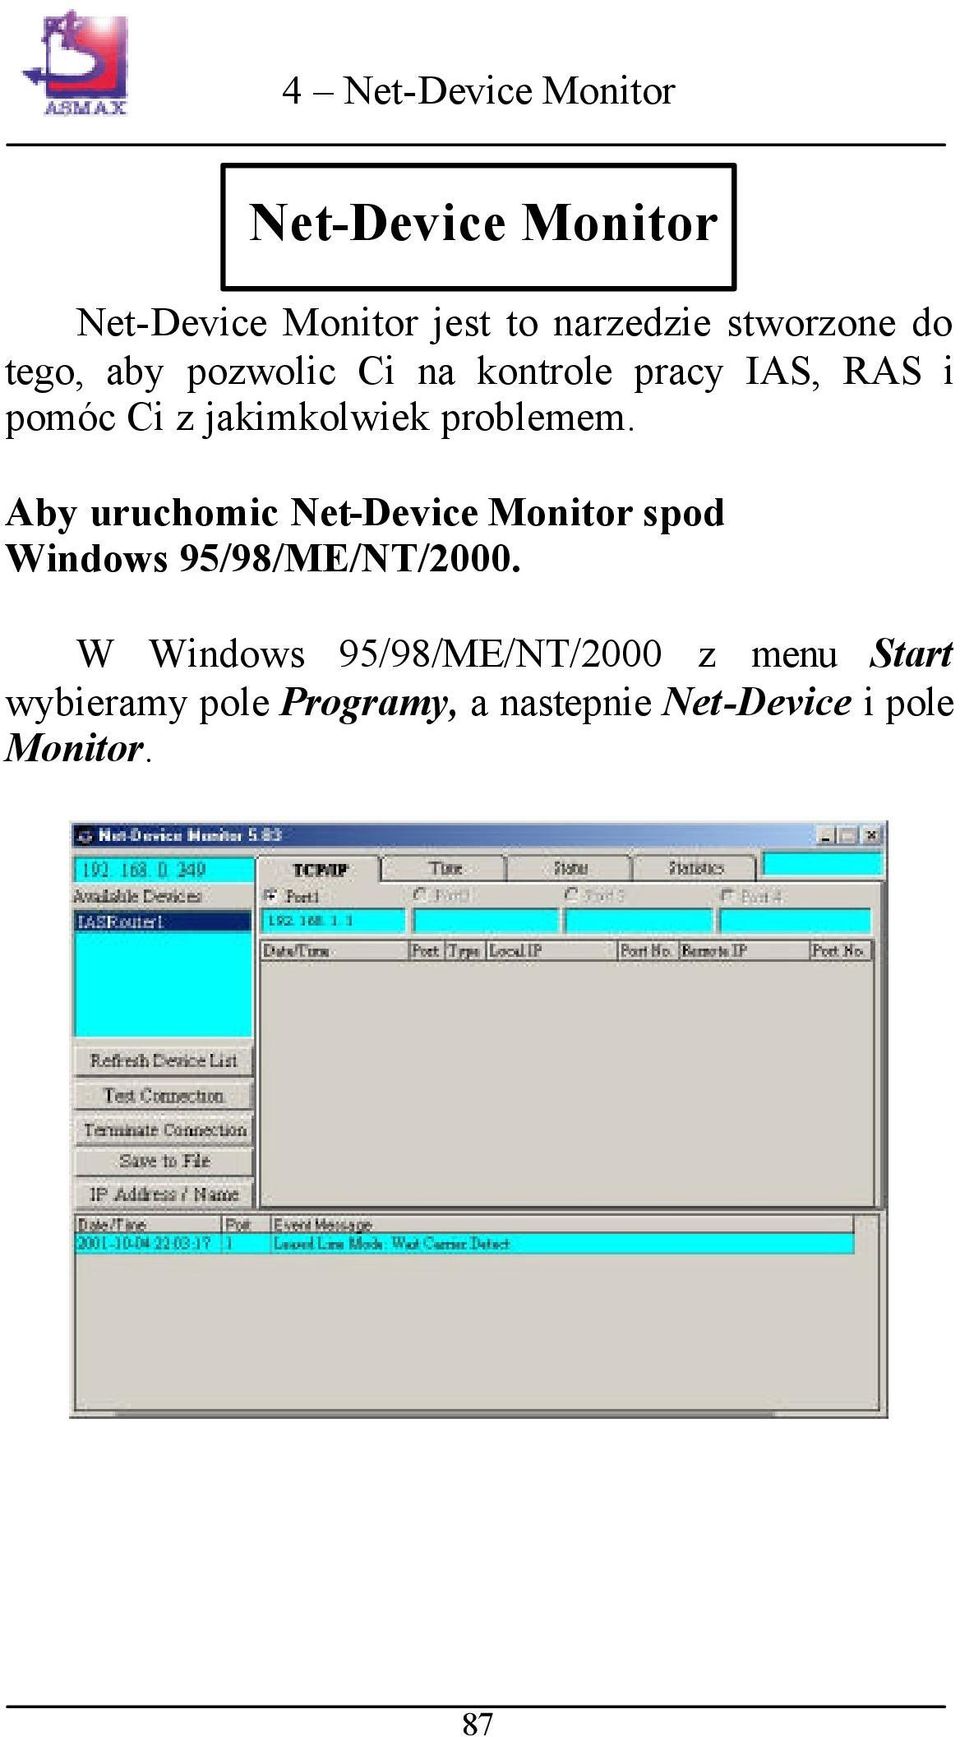 Aby uruchomic Net-Device Monitor spod Windows 95/98/ME/NT/2000.